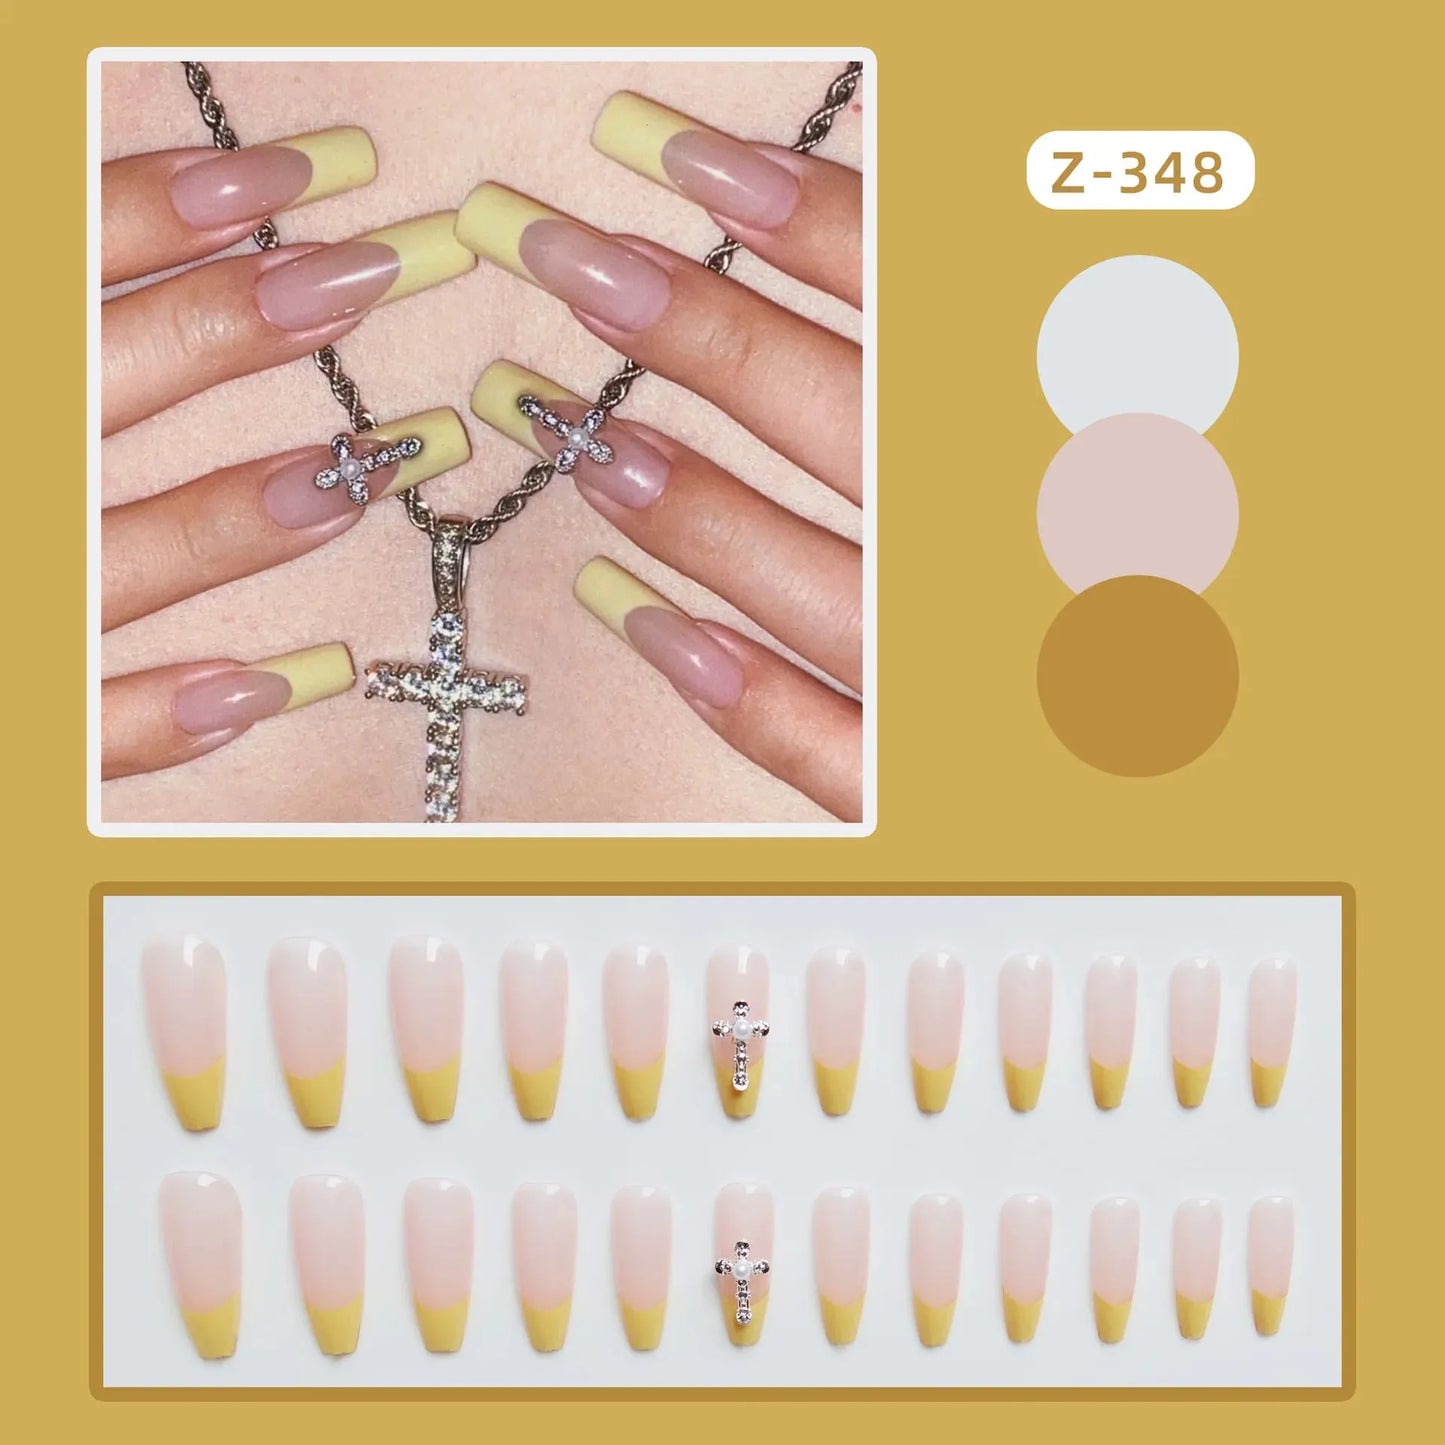 24Pcs Long Coffin Ballet False Nails Rhinestone Decorative Wedding Nail Art Tips Detachable Acrylic Full Cover Press On Nails